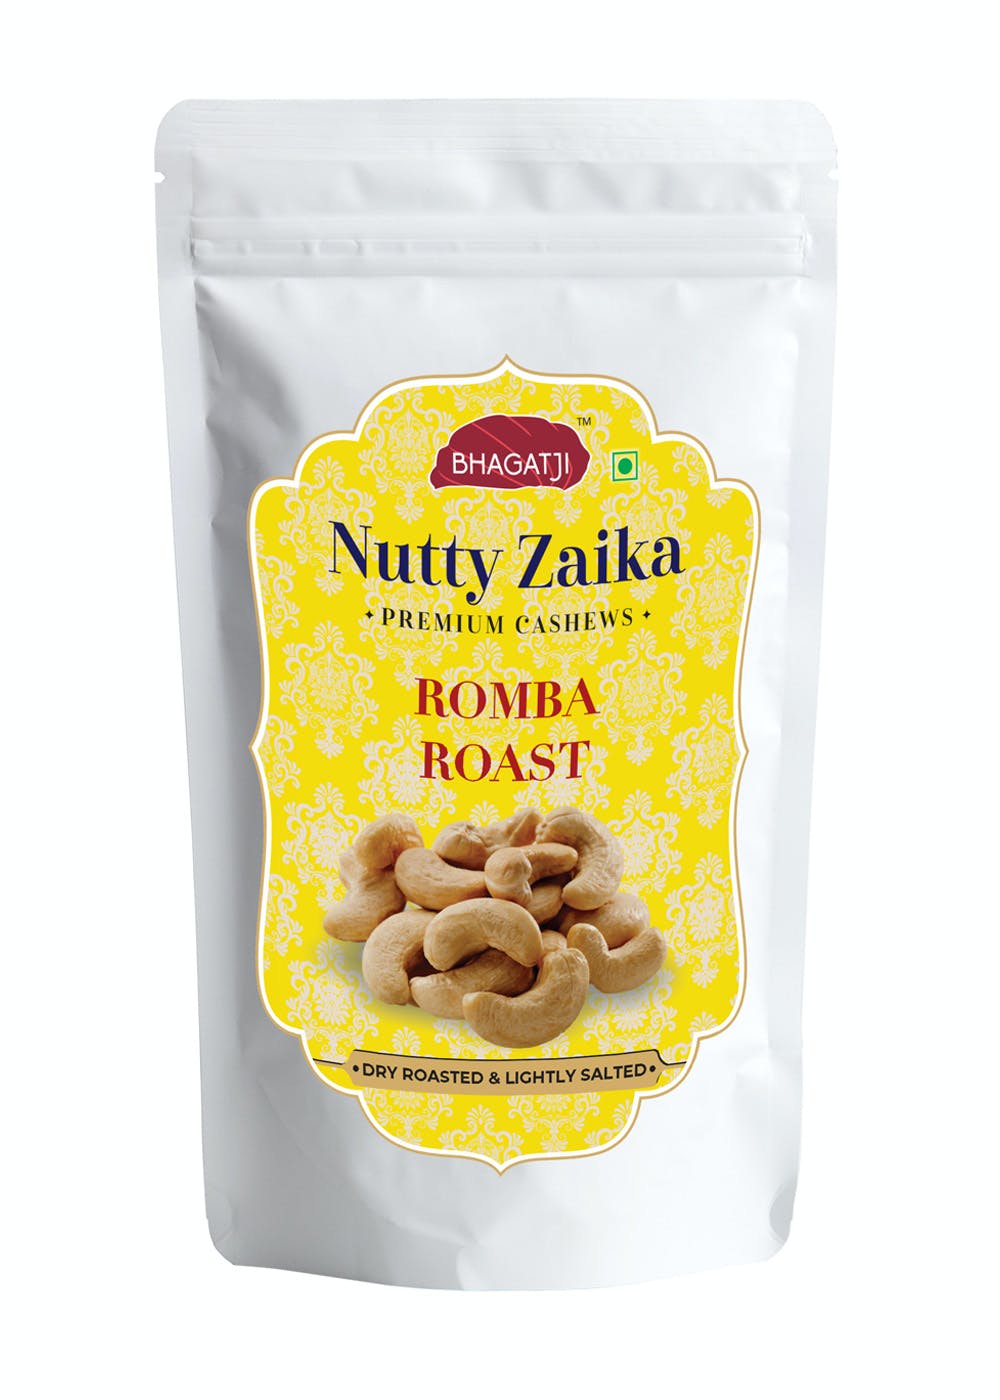 Nutty Zaika Premium Cashews (Romba Roast) - 200g